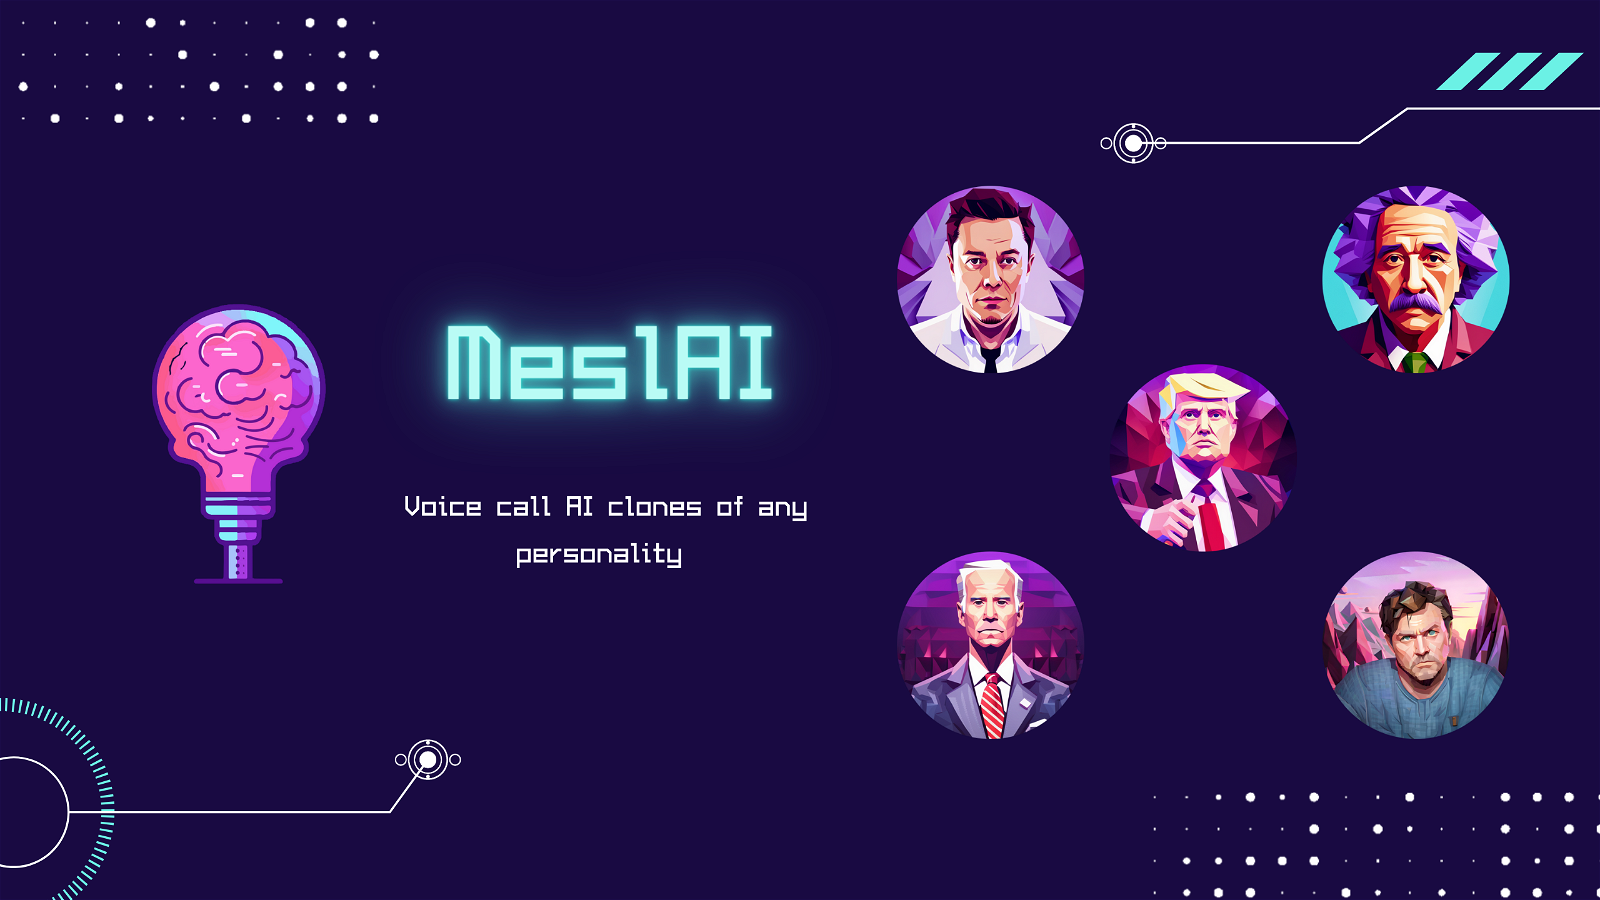 MeslAI website